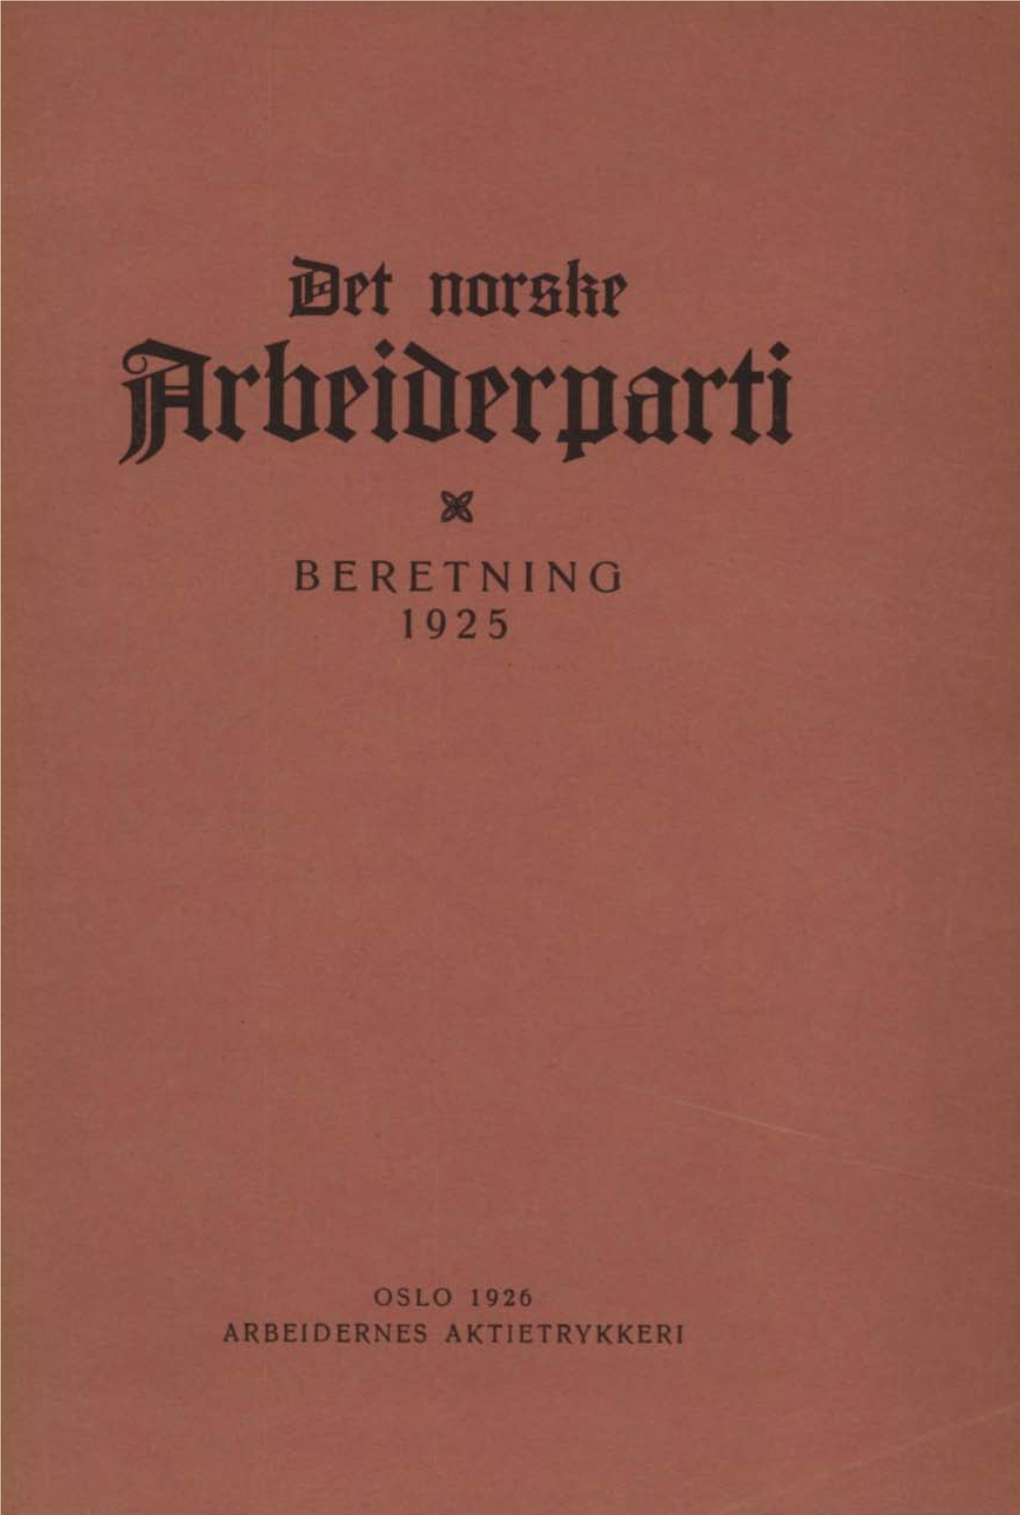 Beretning 1925